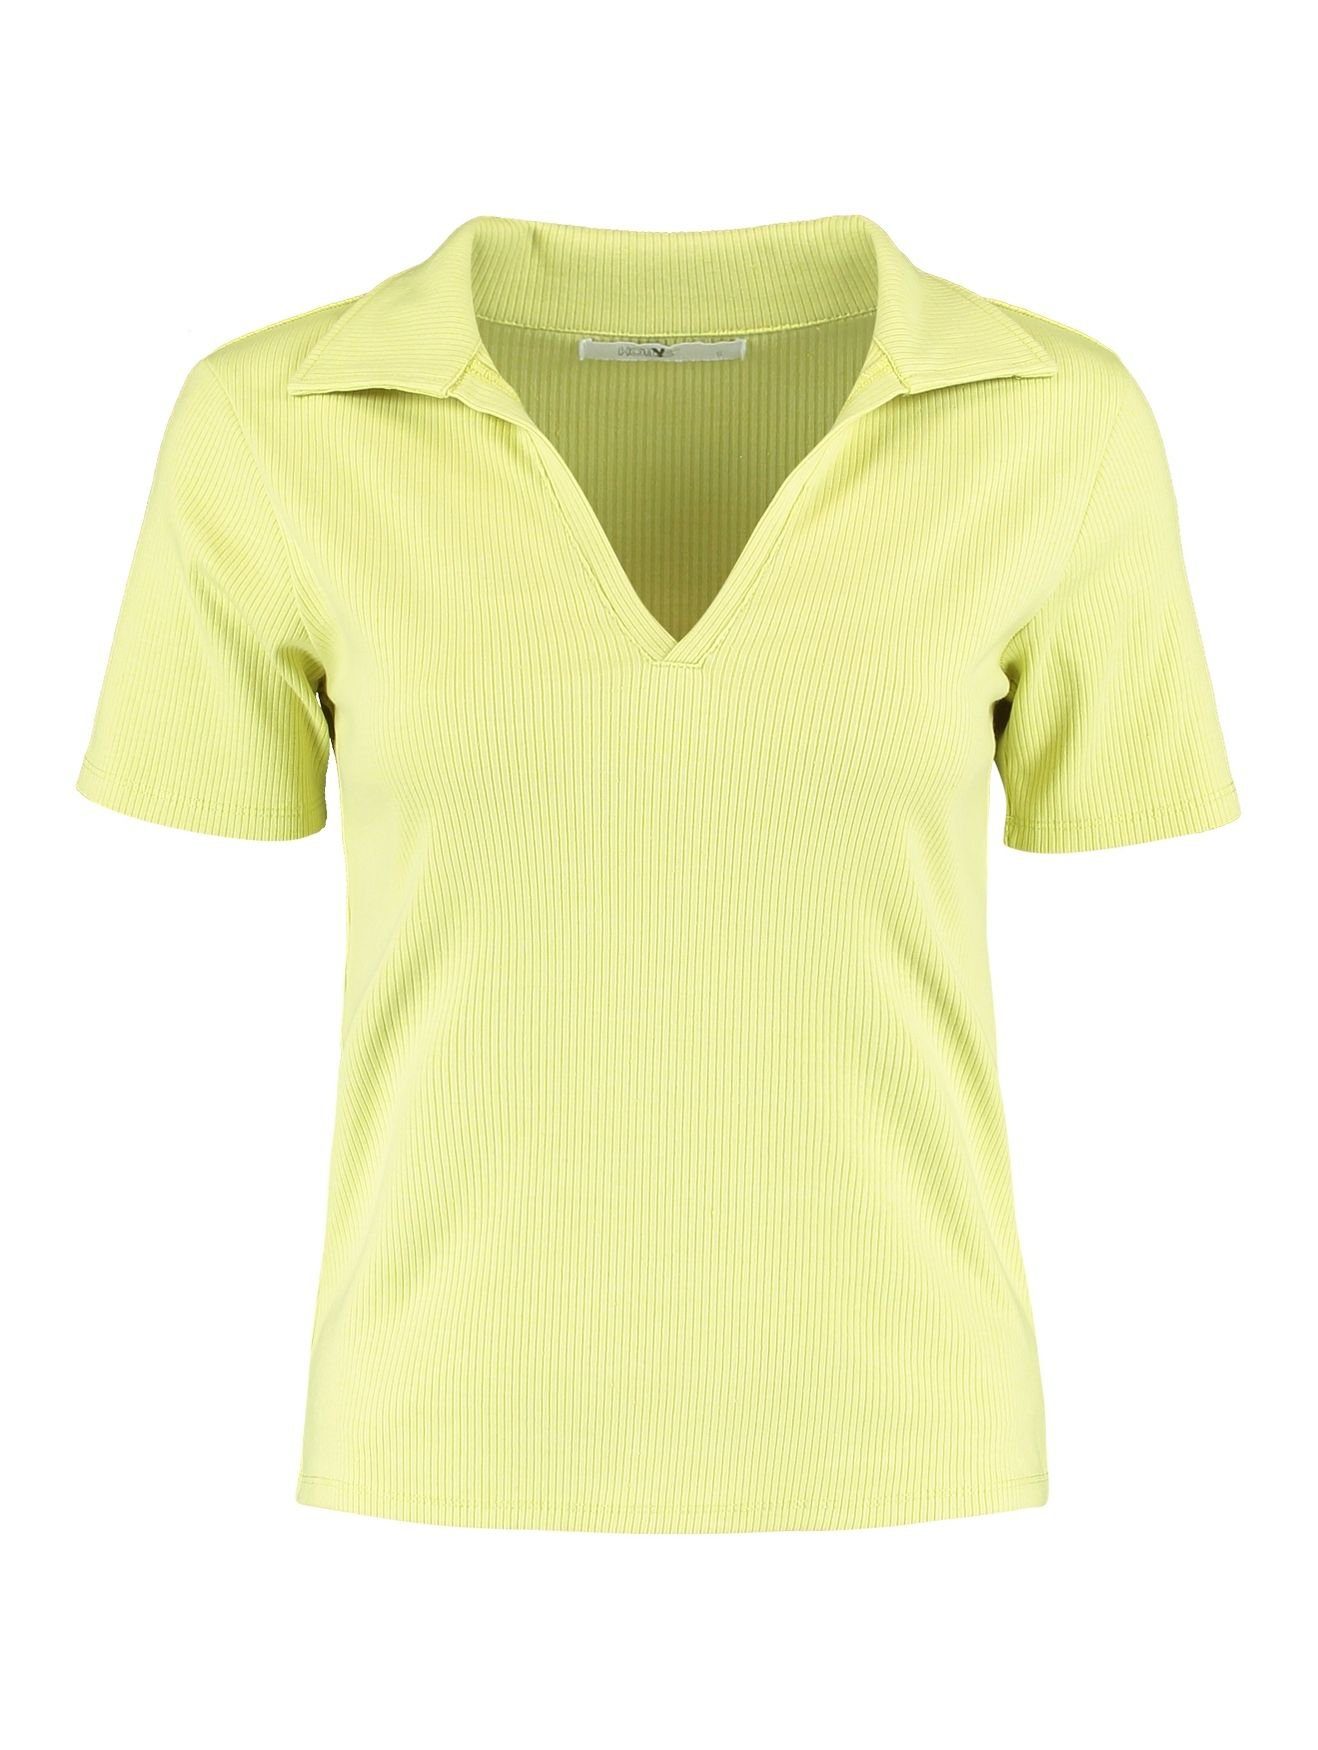 Gelb Poloshirt Bluse 5079 V-AusschnittT-Shirt T-Shirt Kurzarm HaILY\'S VICKY Geripptes in